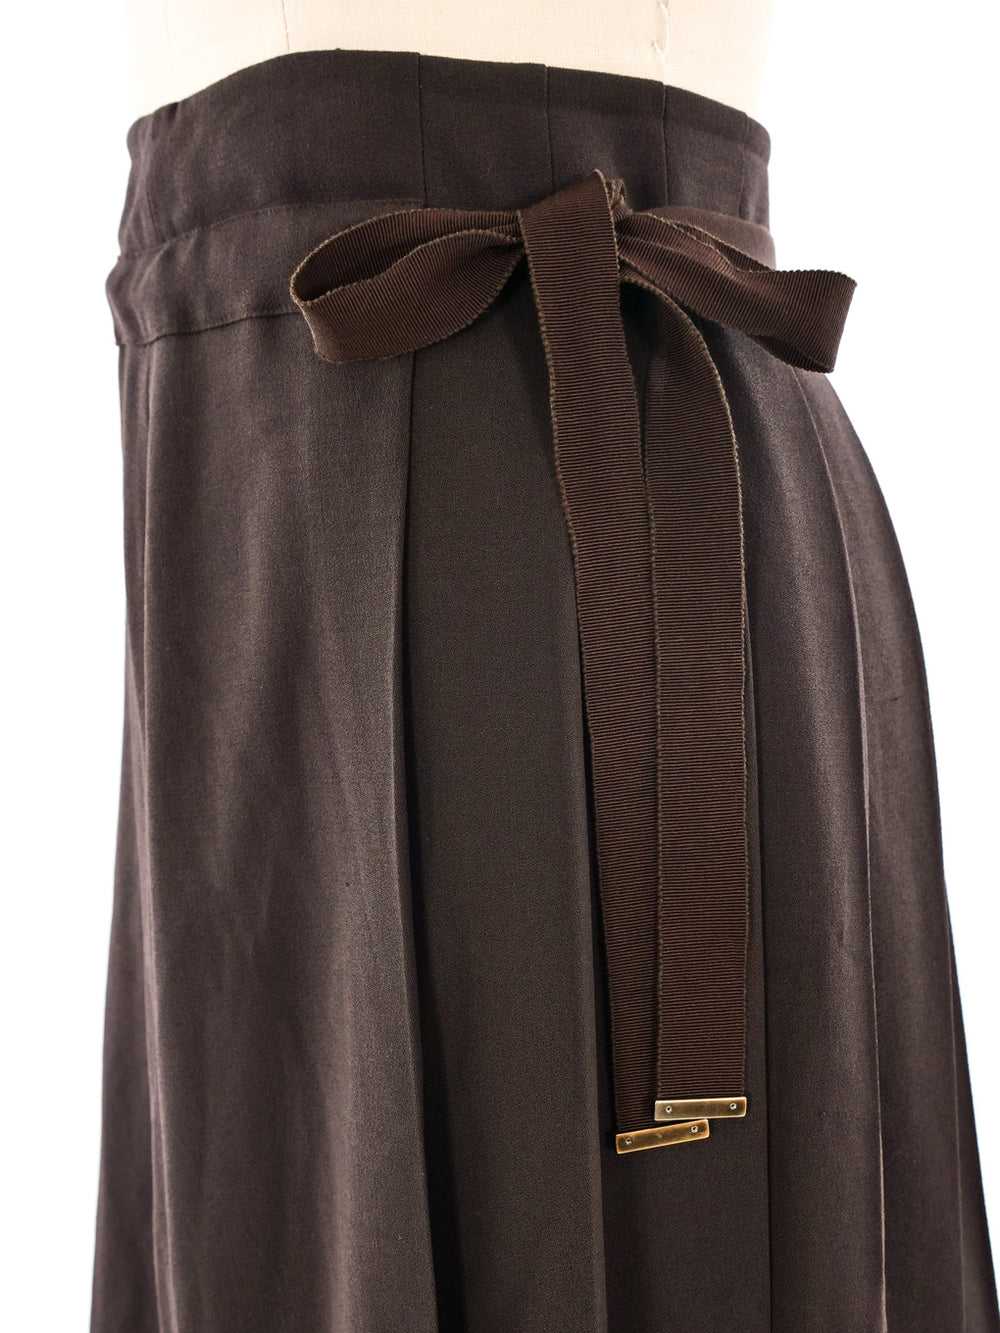 Salvatore Ferragamo Chocolate Wool Pleated Skirt - image 2